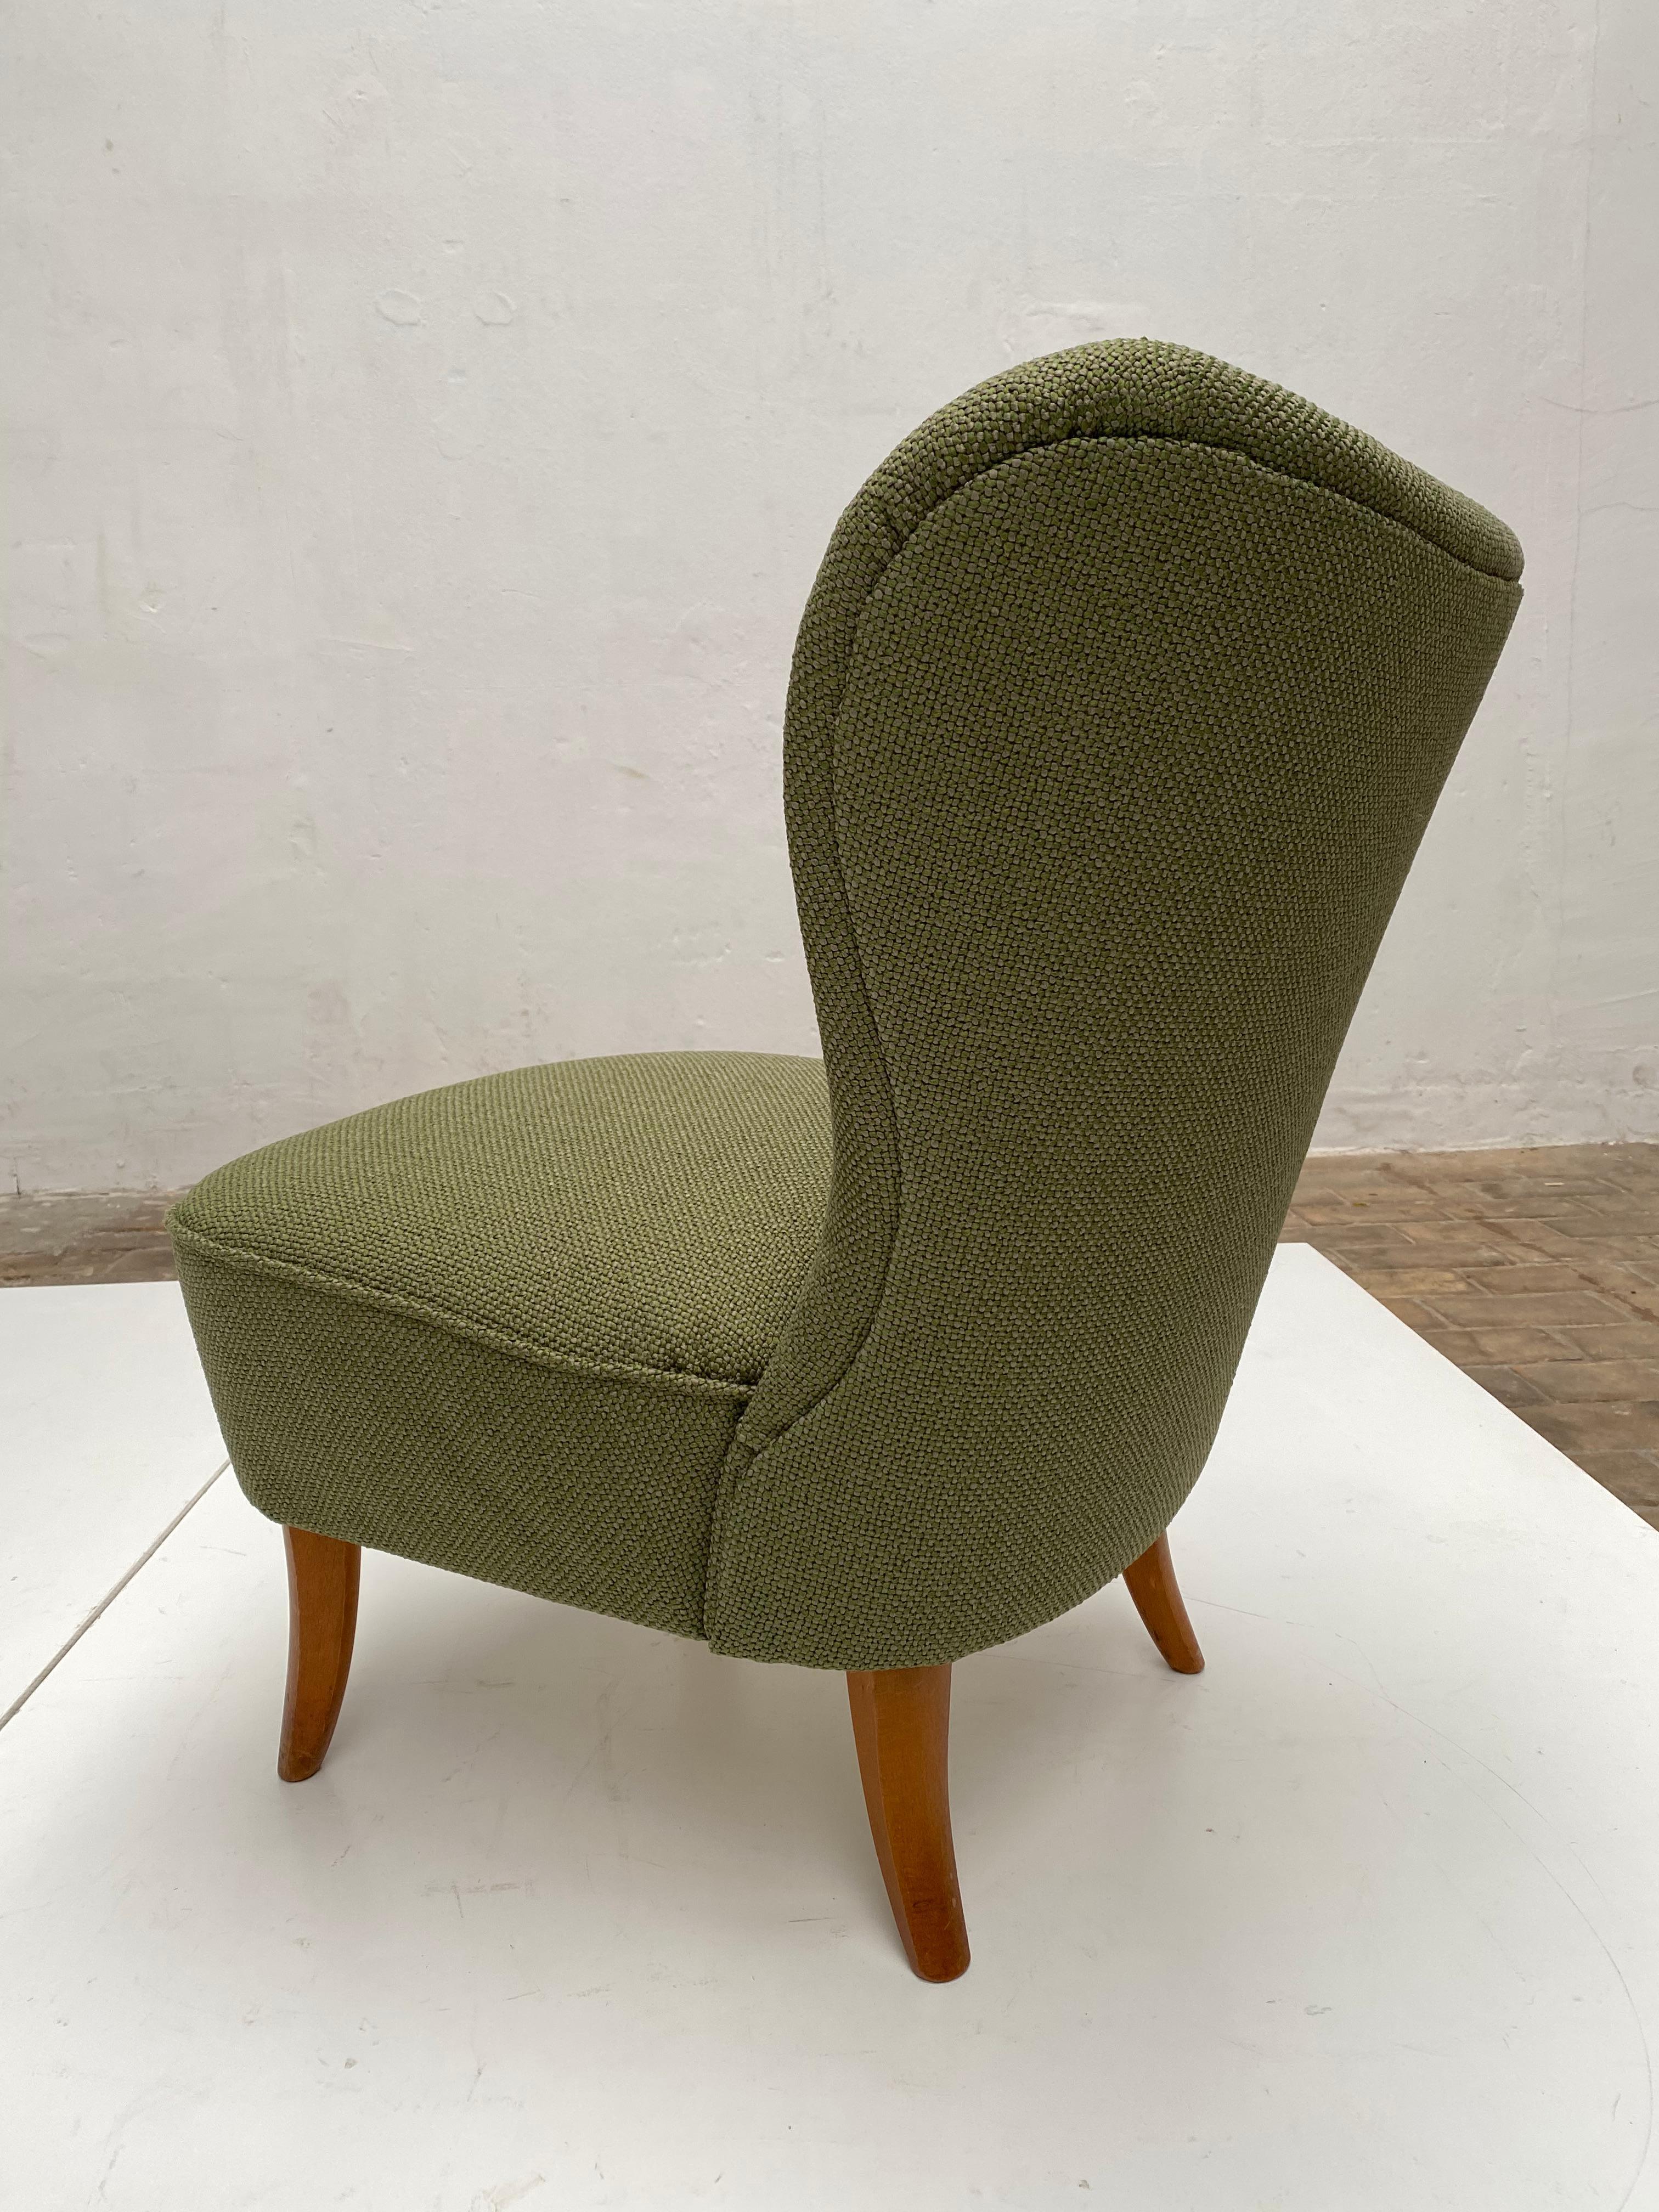 Steel New Upholstered Ploeg Wool Lounge Chair by Tijsseling, the Netherlands, 1950s